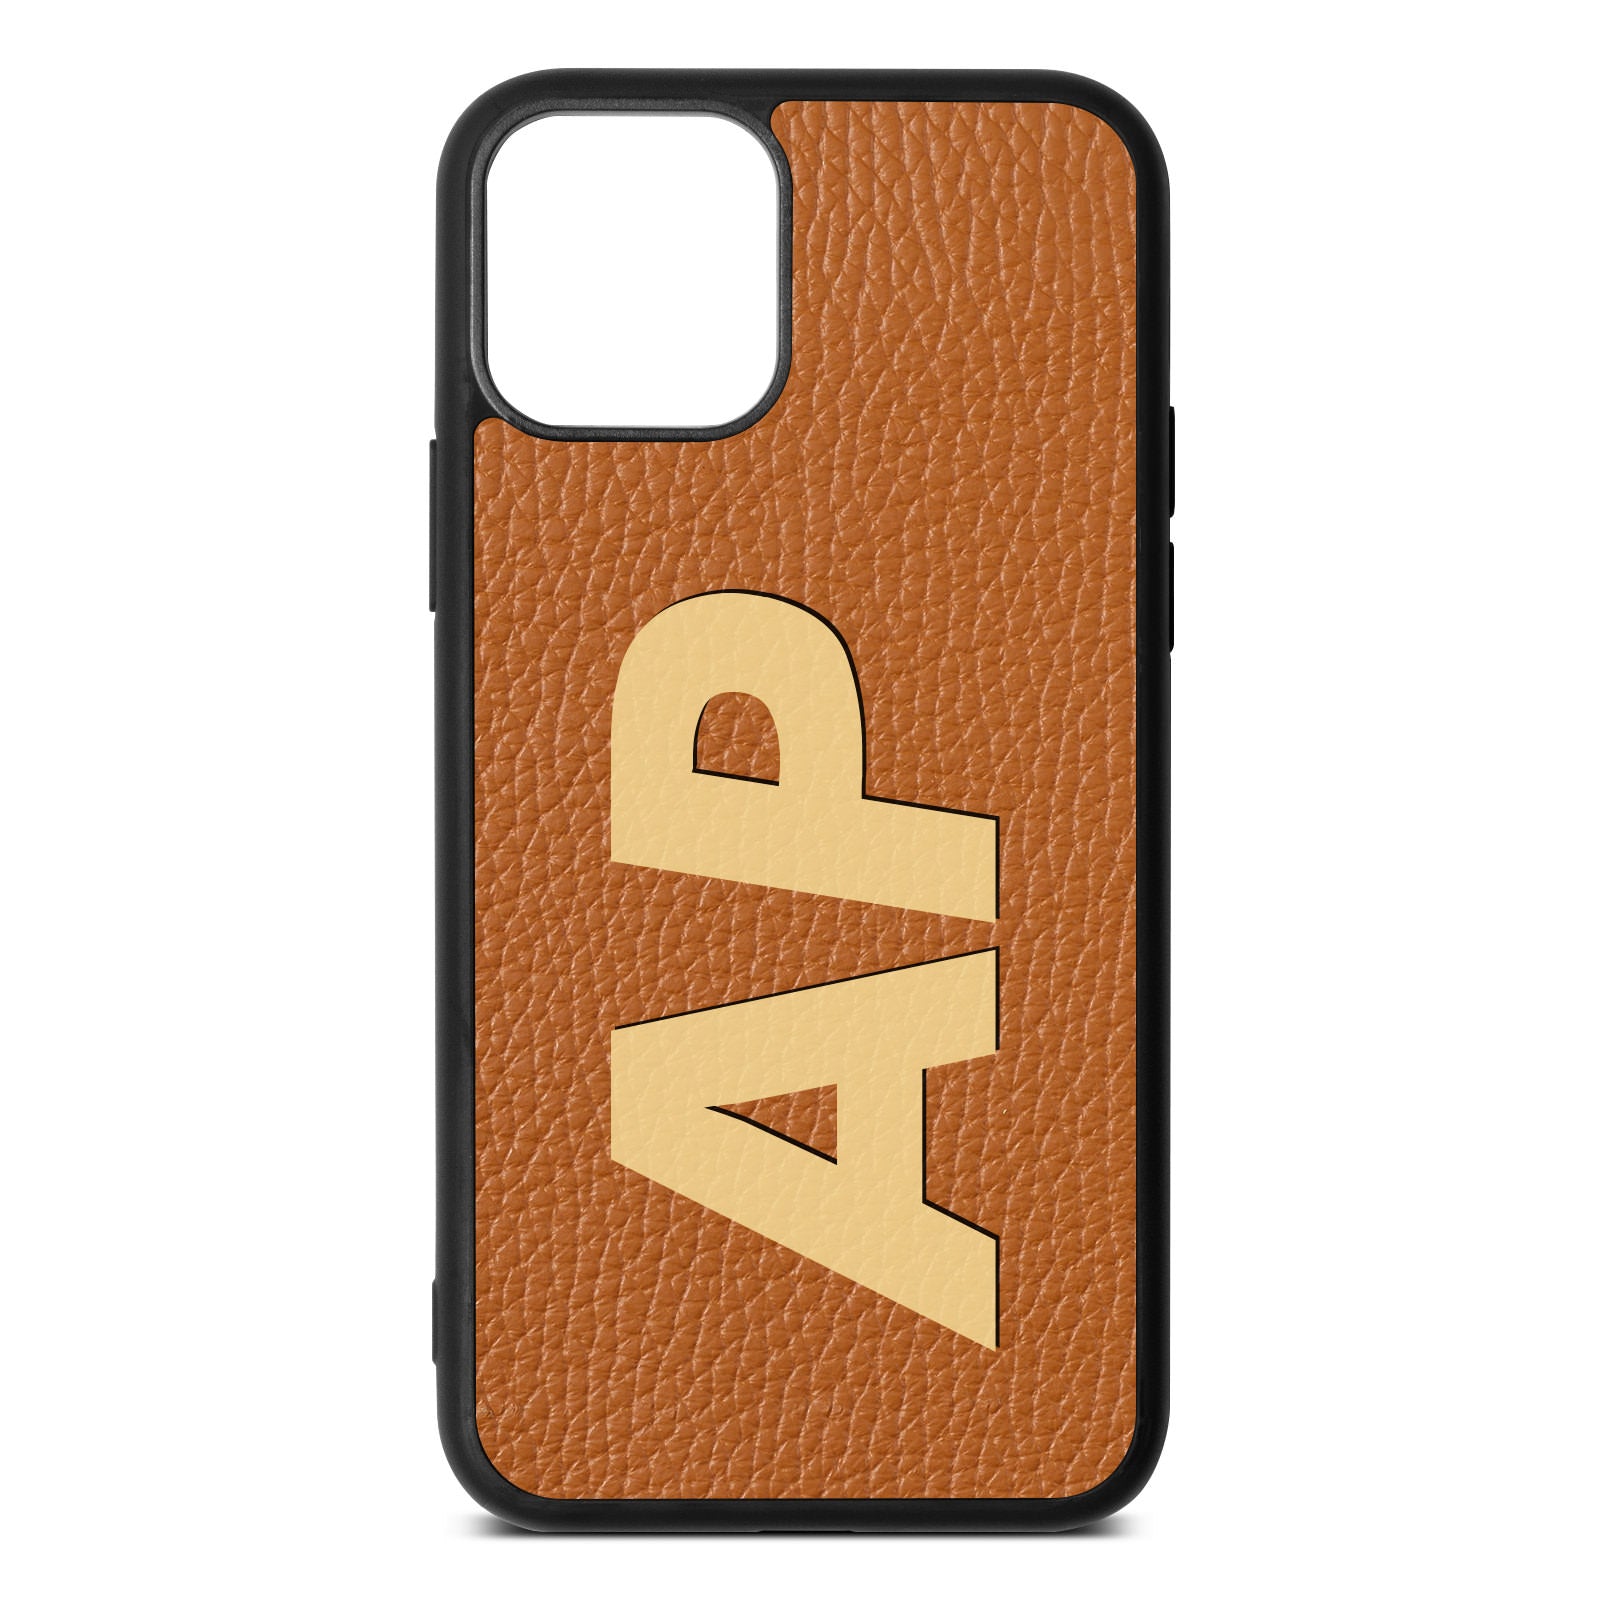 iPhone 11 Pro Tan Pebble Leather Case